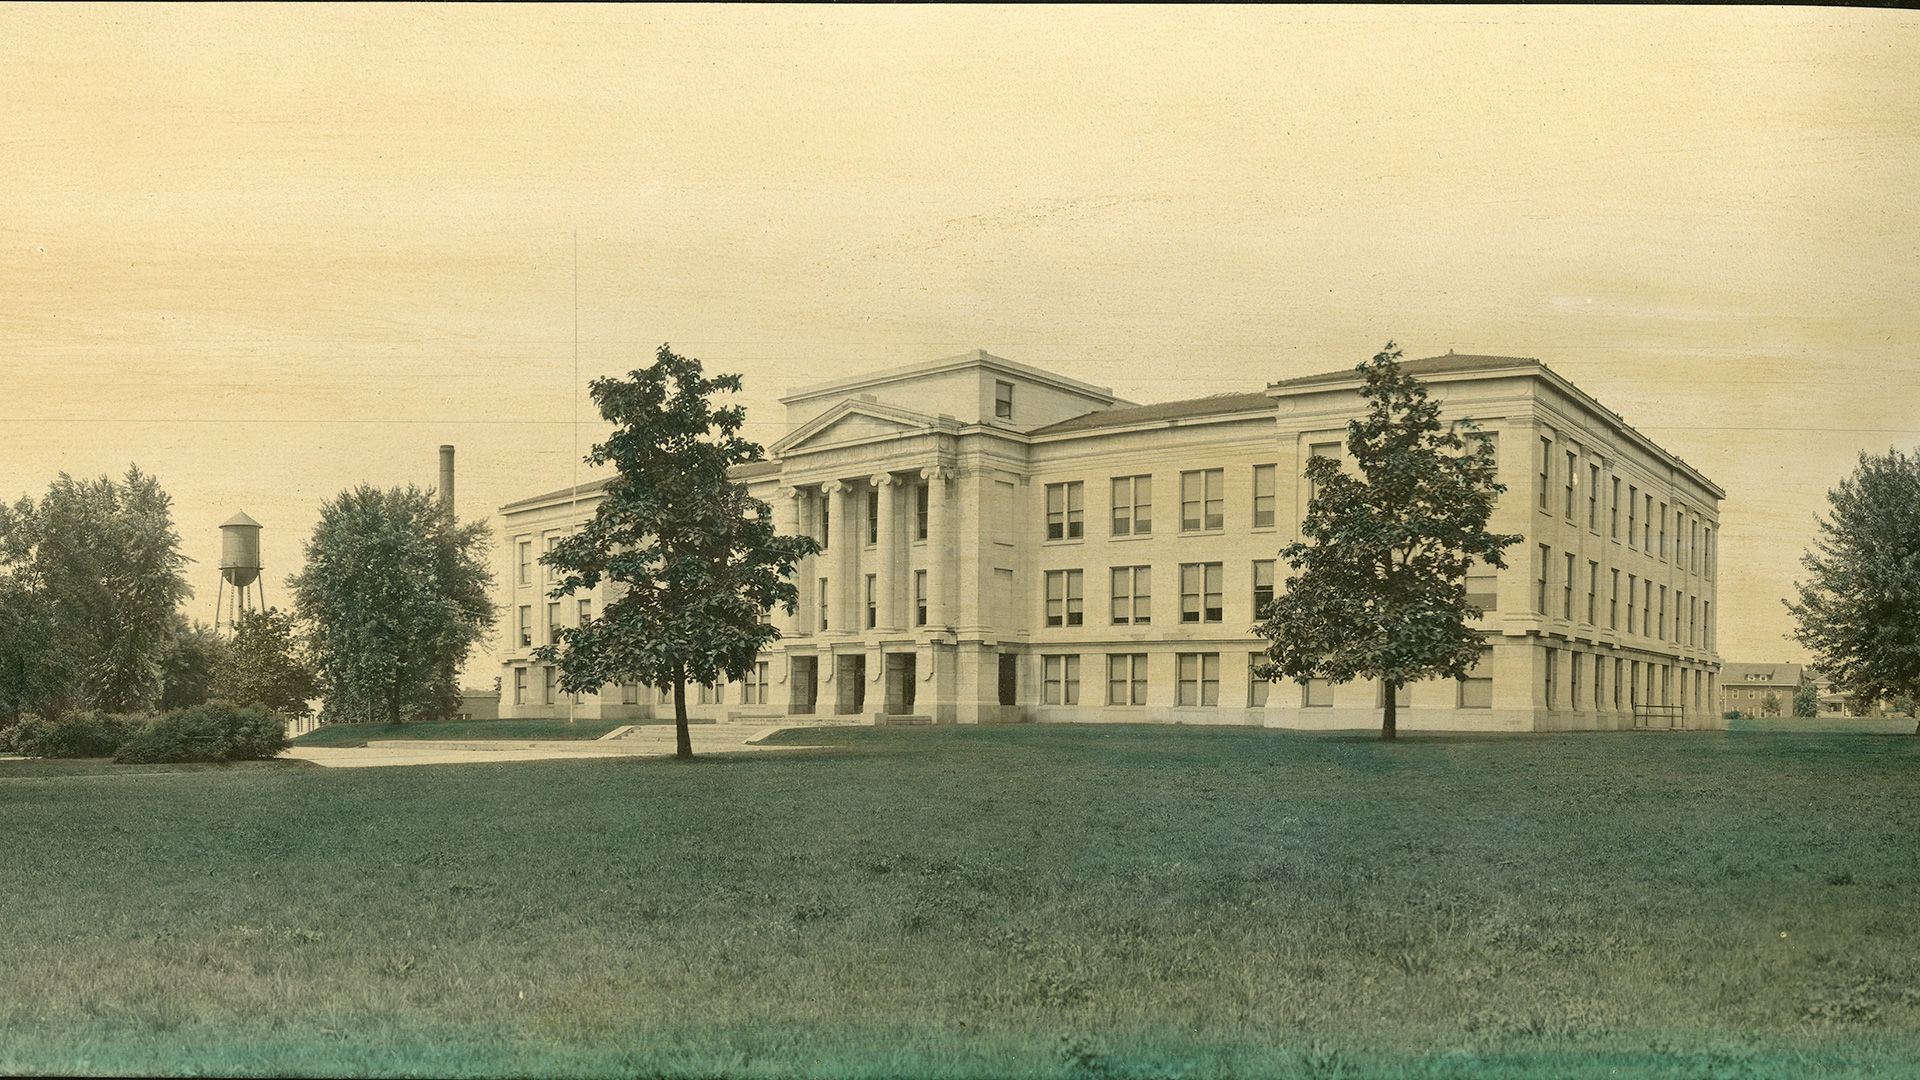 Historical photo of Carrington Hall at Missouri State University